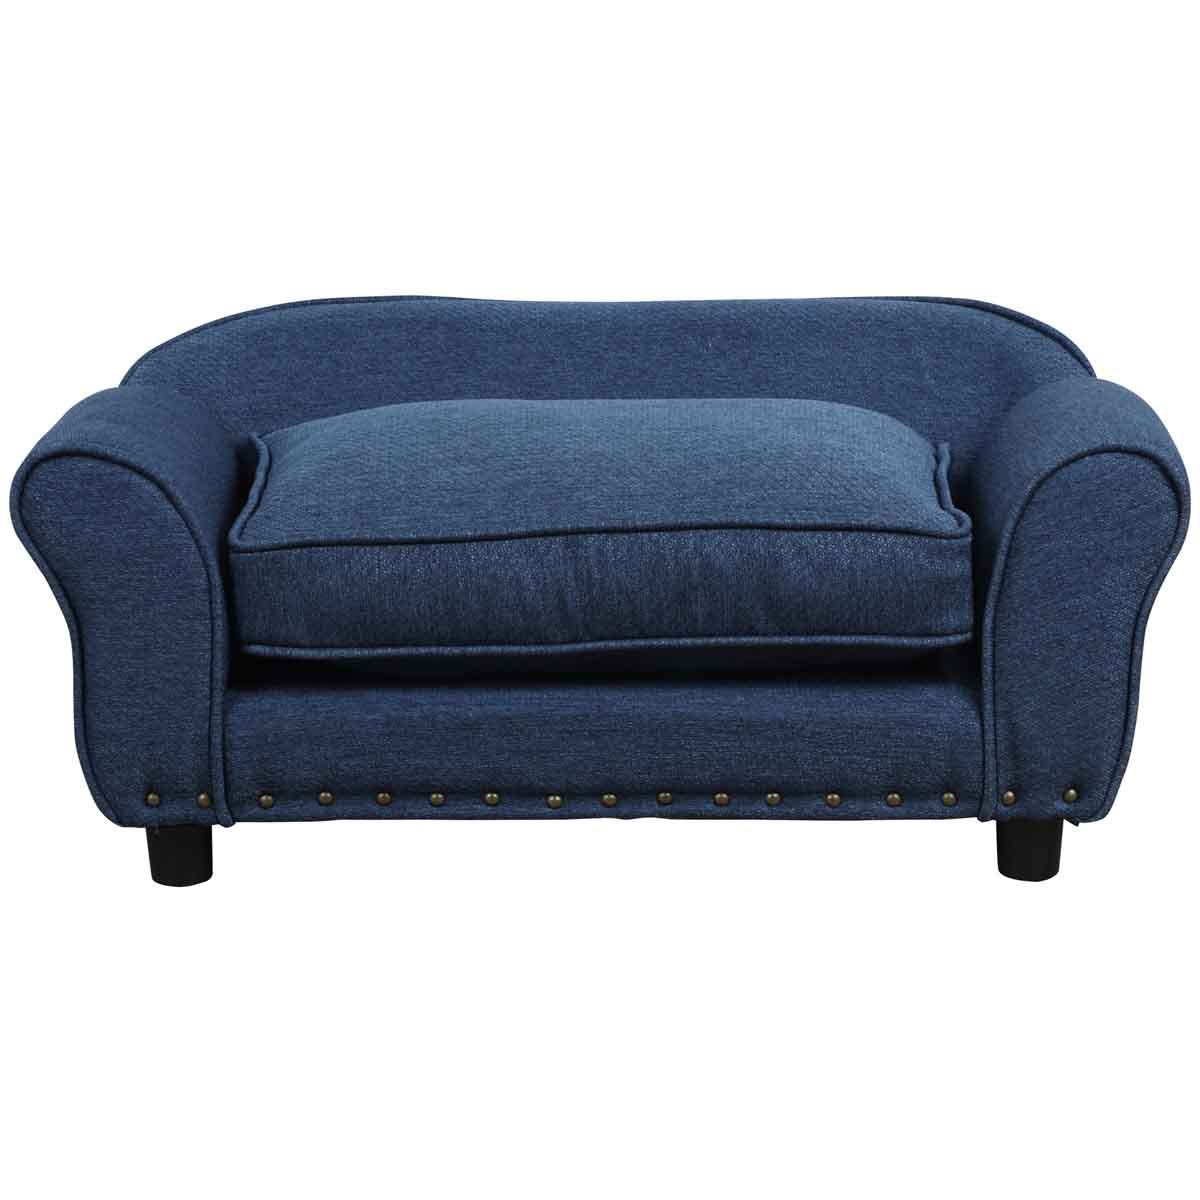 PawHut Stylish Linen Pet Sofa W/ Wood Frame & Metal Studding Legs Dog - Blue